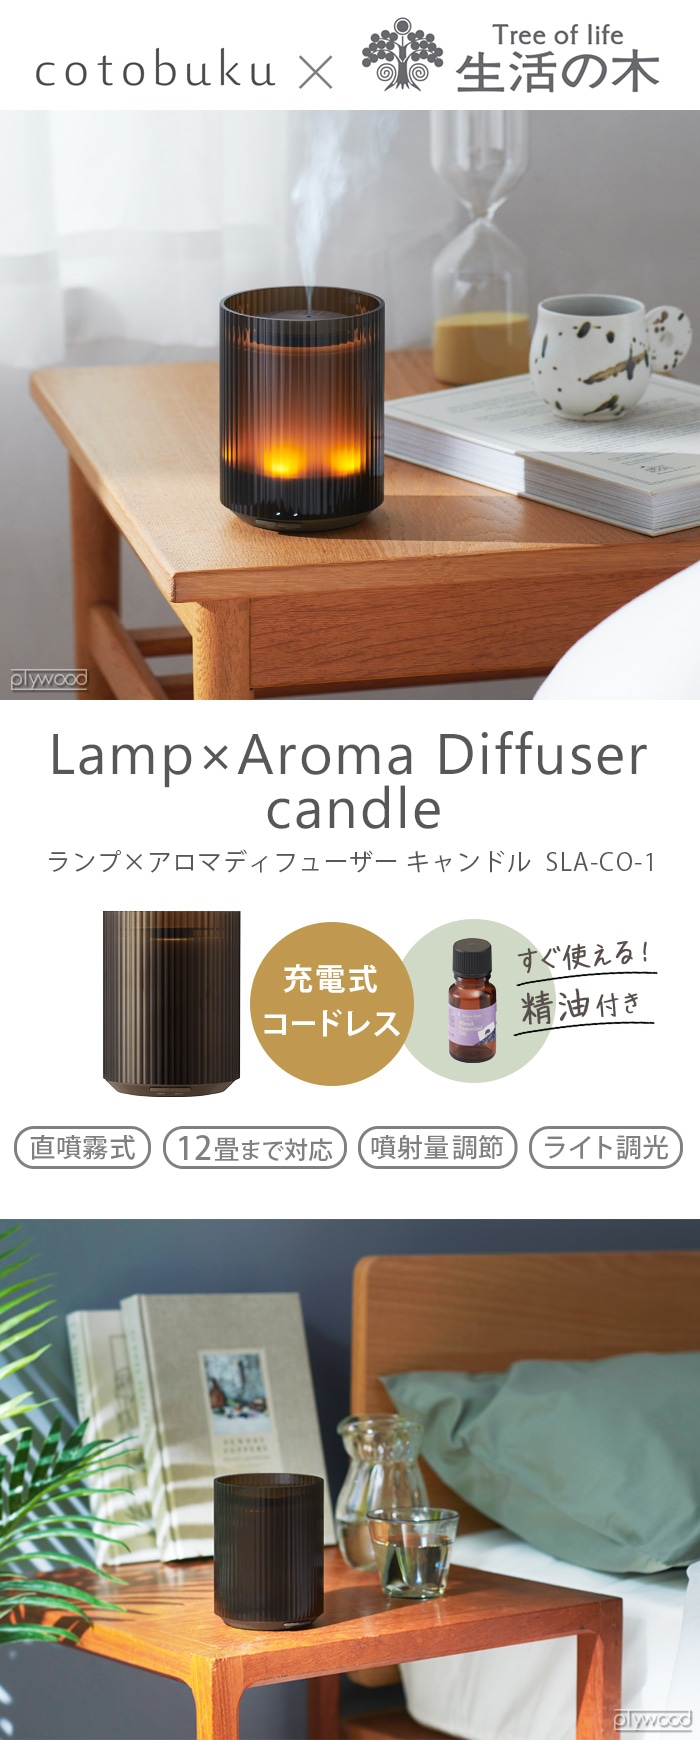 cotobuku×生活の木 Lamp×Aroma Diffuser candle [SLA-CO-1] コトブク 